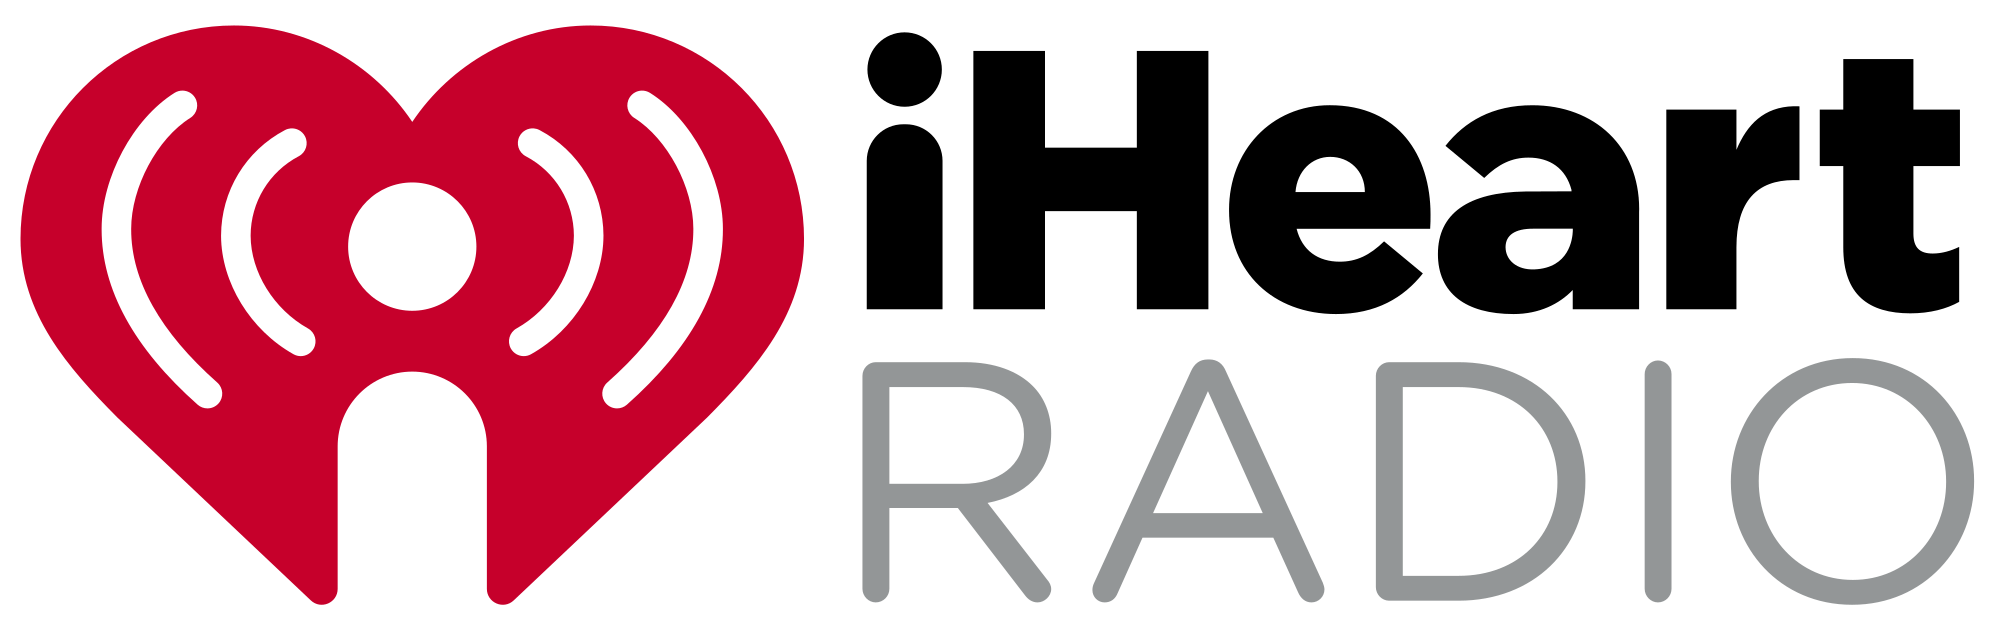 iHeartRadio Logo - File:IHeartRadio logo.svg - Wikimedia Commons